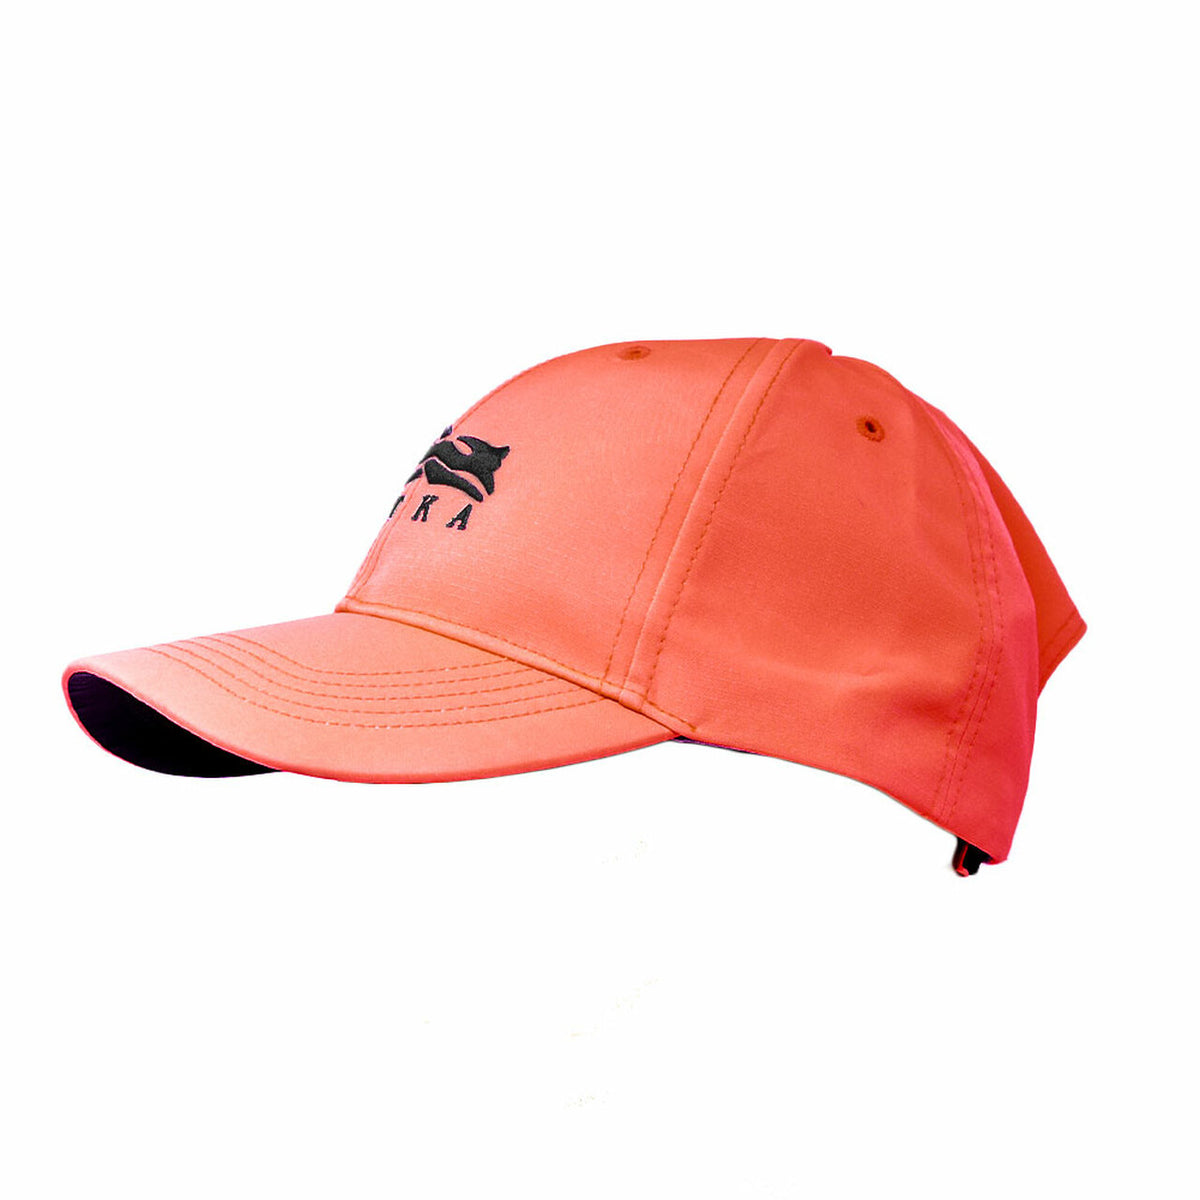 Sitka - Hat - Ballistic Side Logo Cap Blaze Orange One Size Fits All-Hi Country Patch